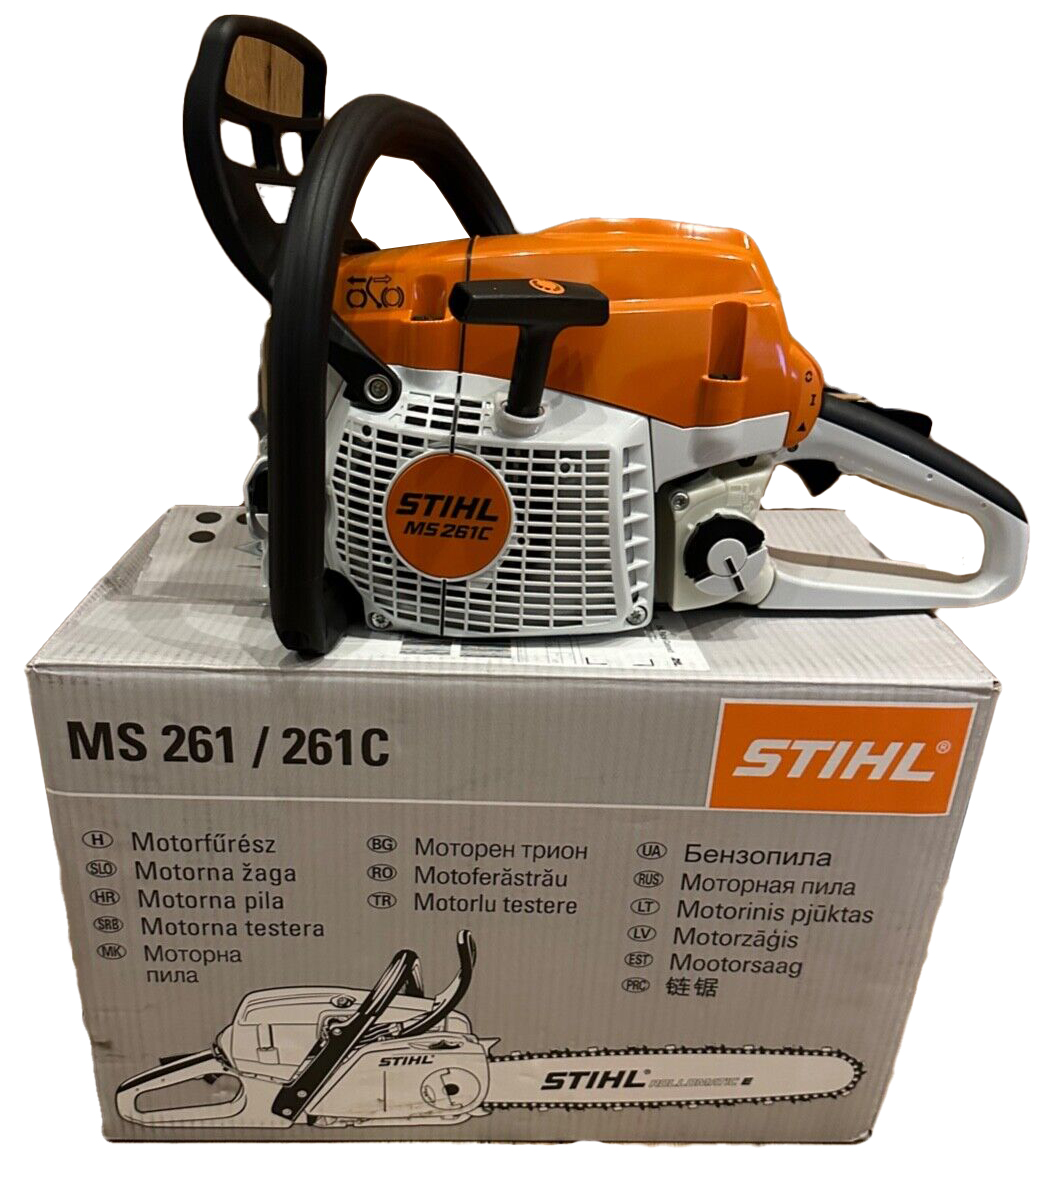 Stihl Motorsäge MS 261 CM 37cm Schnittlänge, Benzin-Kettensäge, Forstsäge,  Benzinsäge